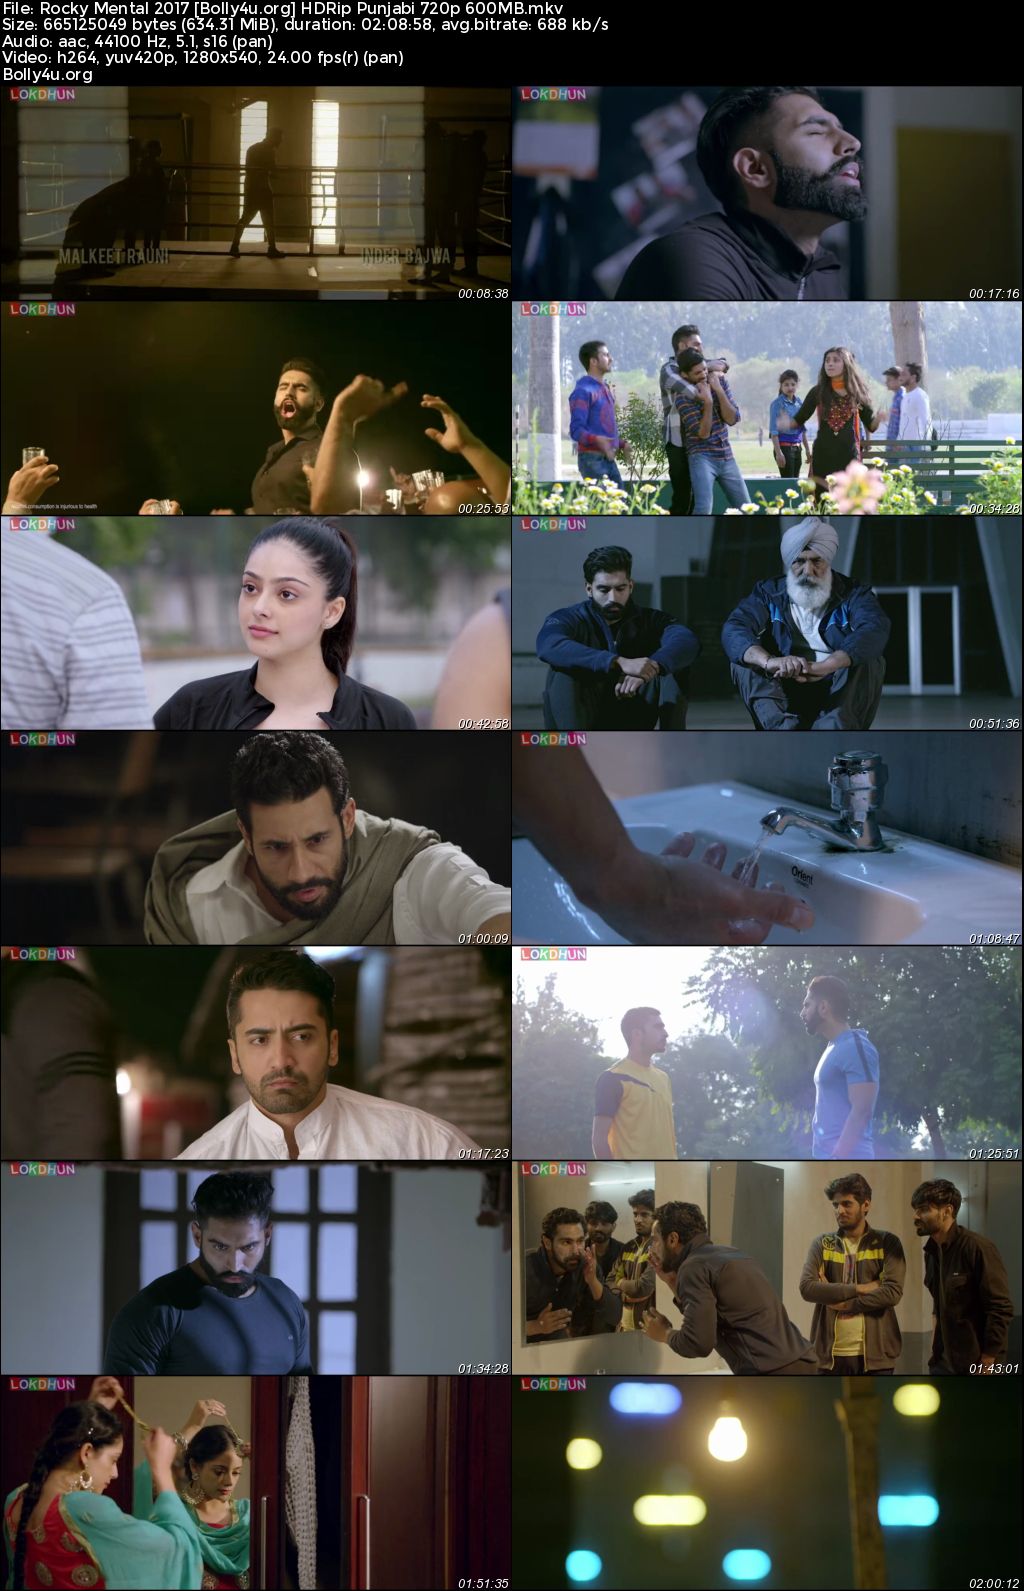 Rocky Mental 2017 HDRip Punjabi Full Movie Download 720p 480p